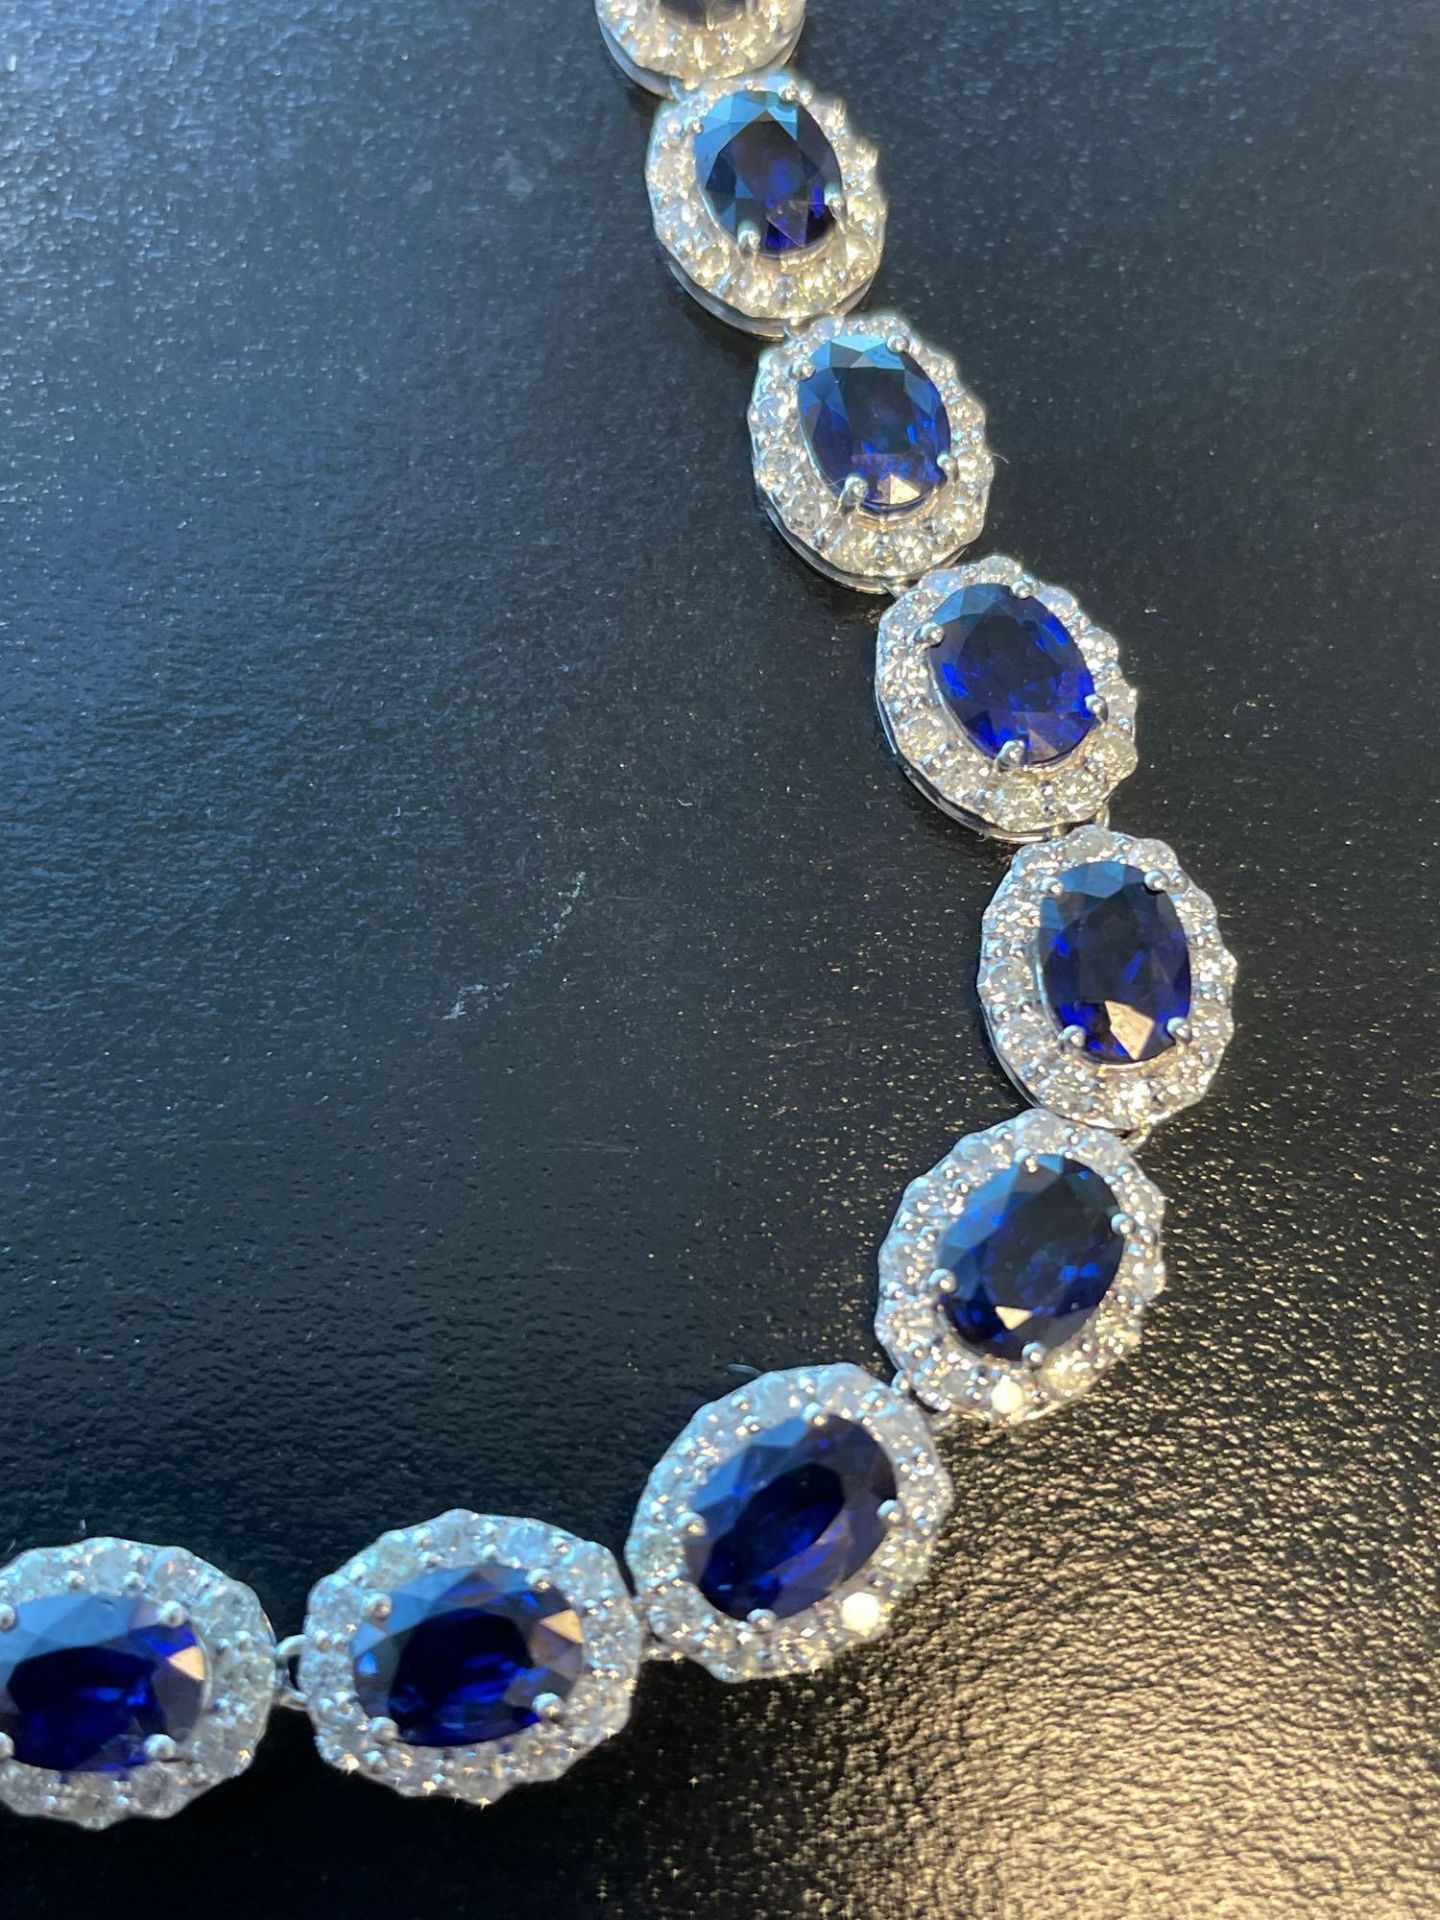 14kt White Gold ladies cast & assembled Blue Sapphire Diamond Necklace - Image 2 of 5